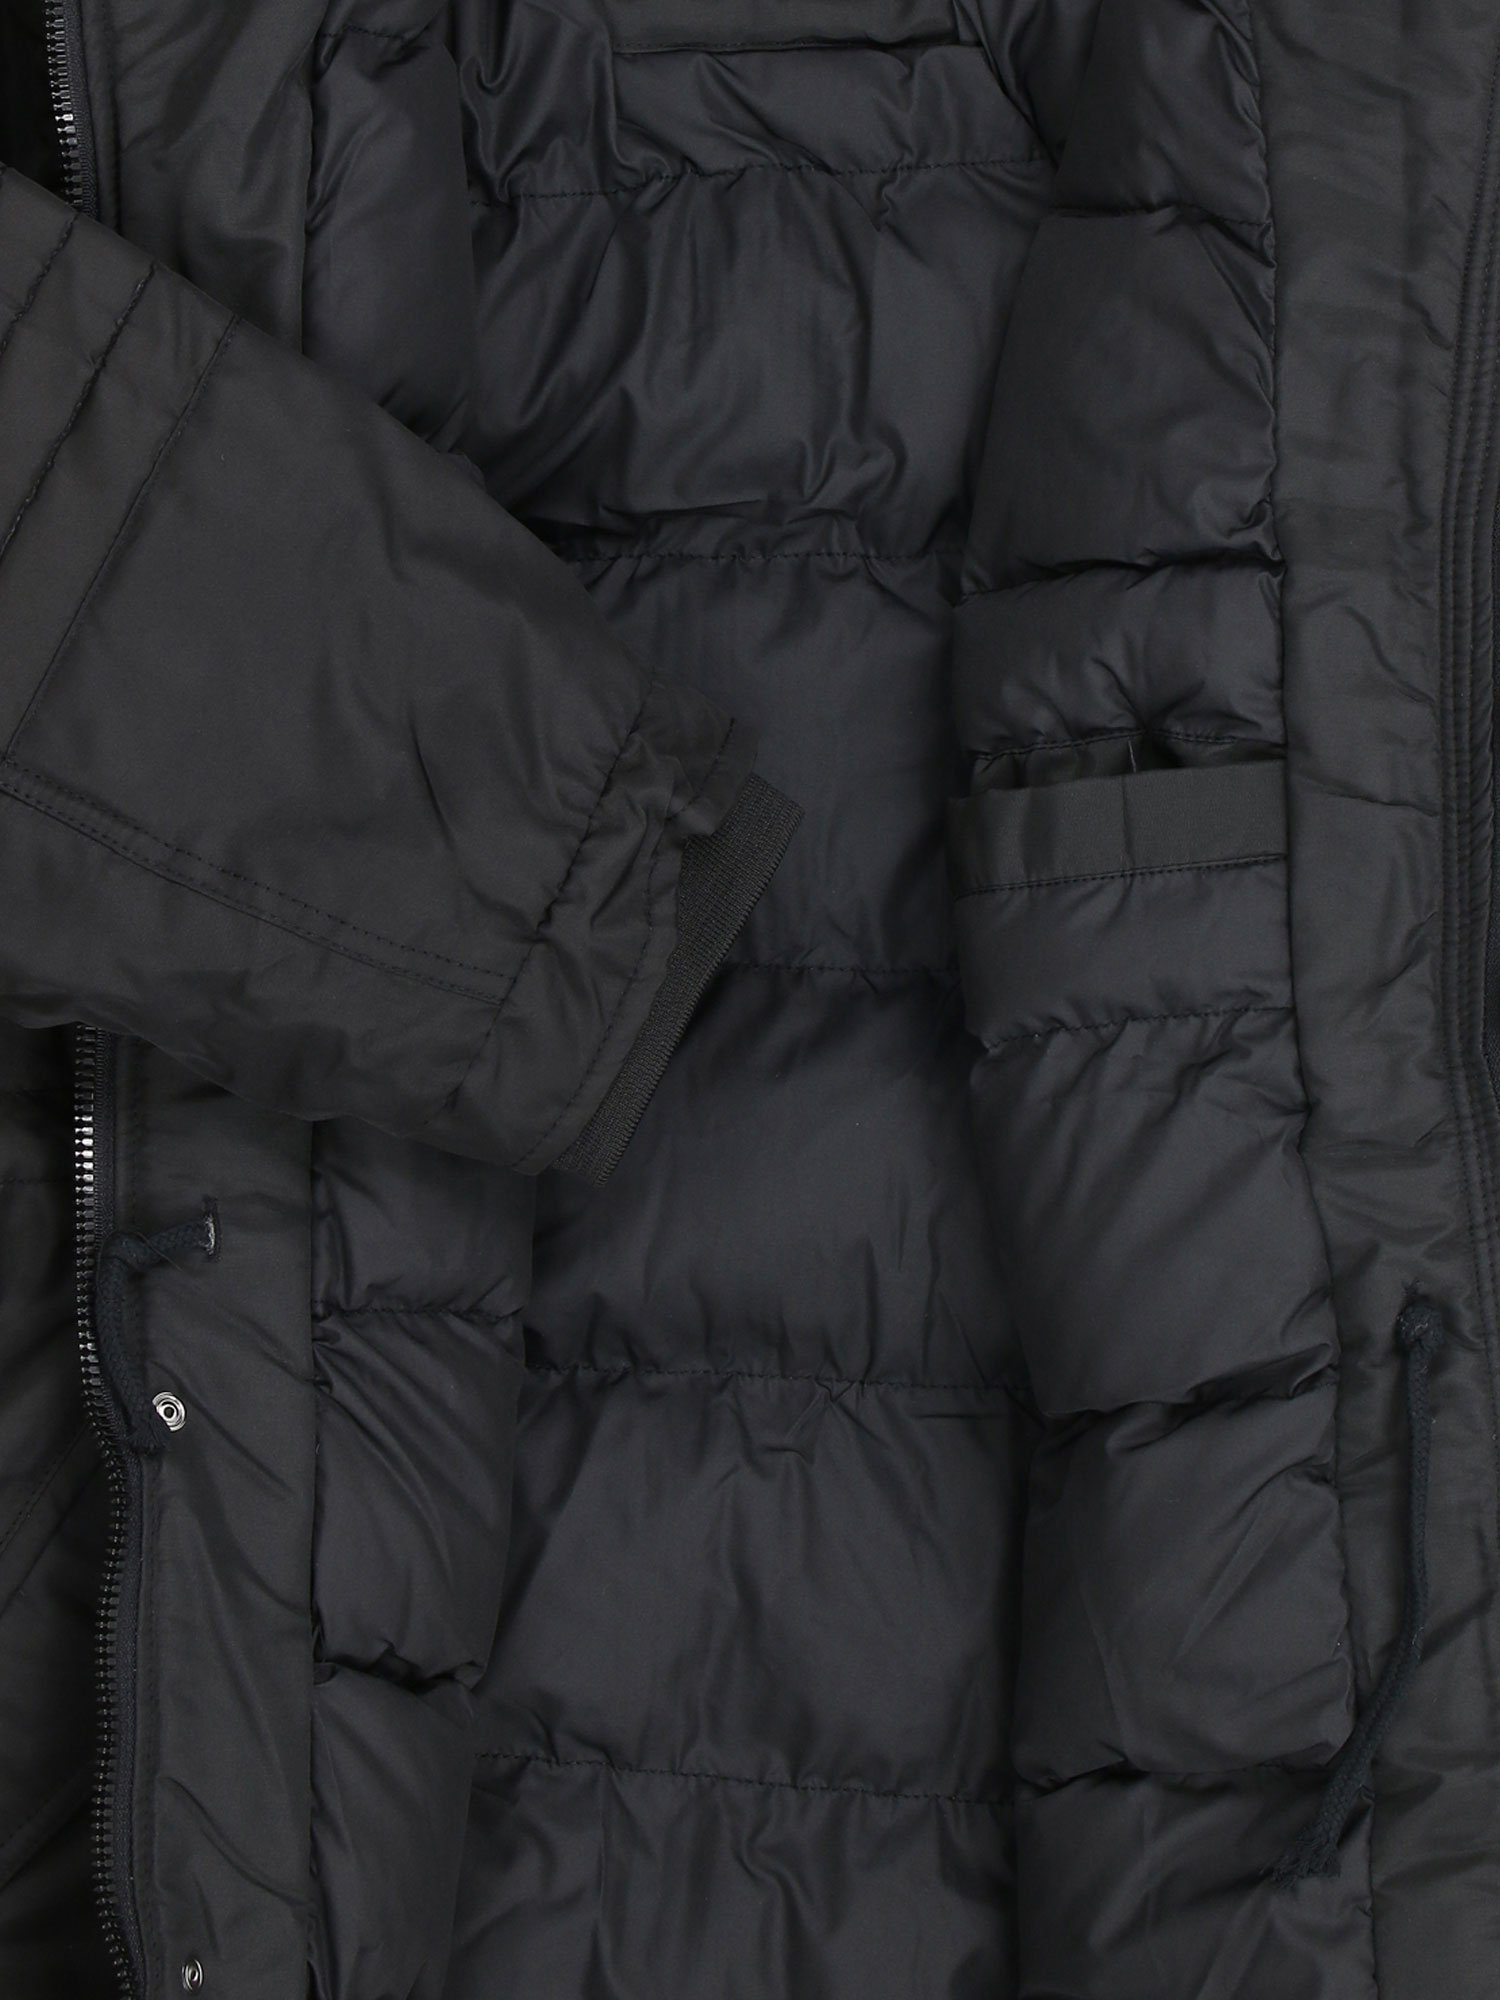 Lavecchia Winterjacke Übergrößen Jacke LV-700 & mit Kapuze gefütterterter schwarz abnehmbarer